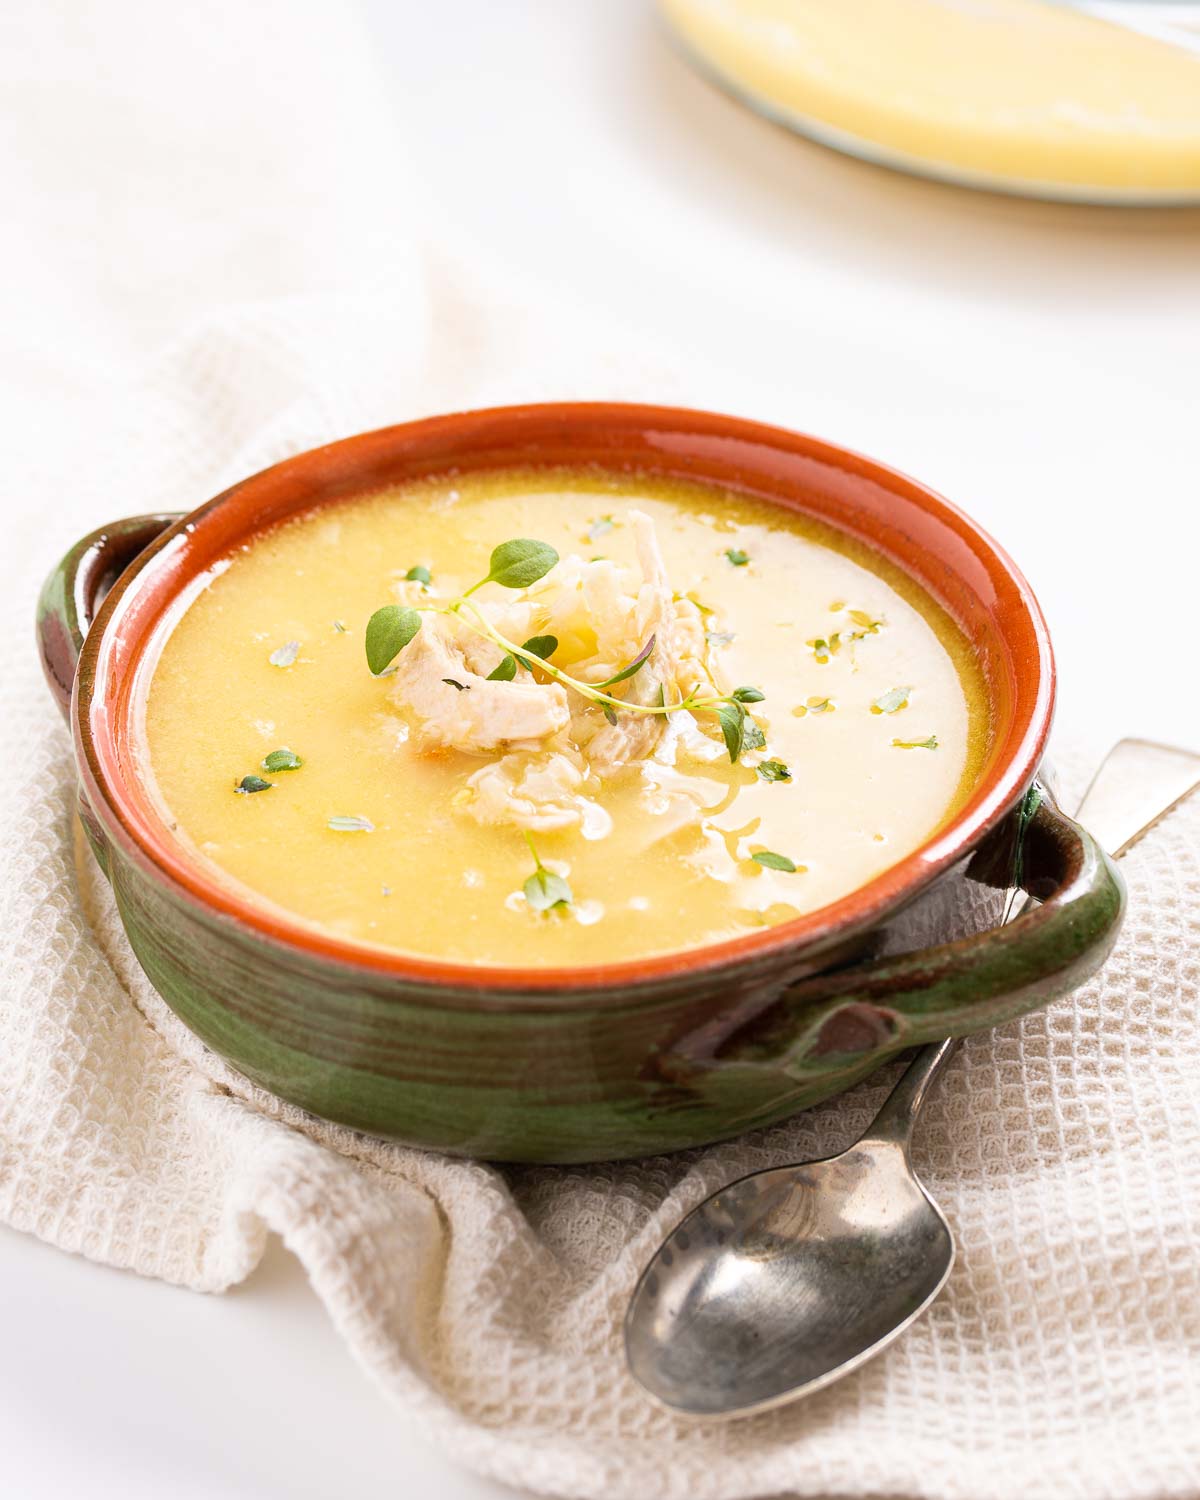 A bowl of Greek lemon chicken and cauliflower rice soup.